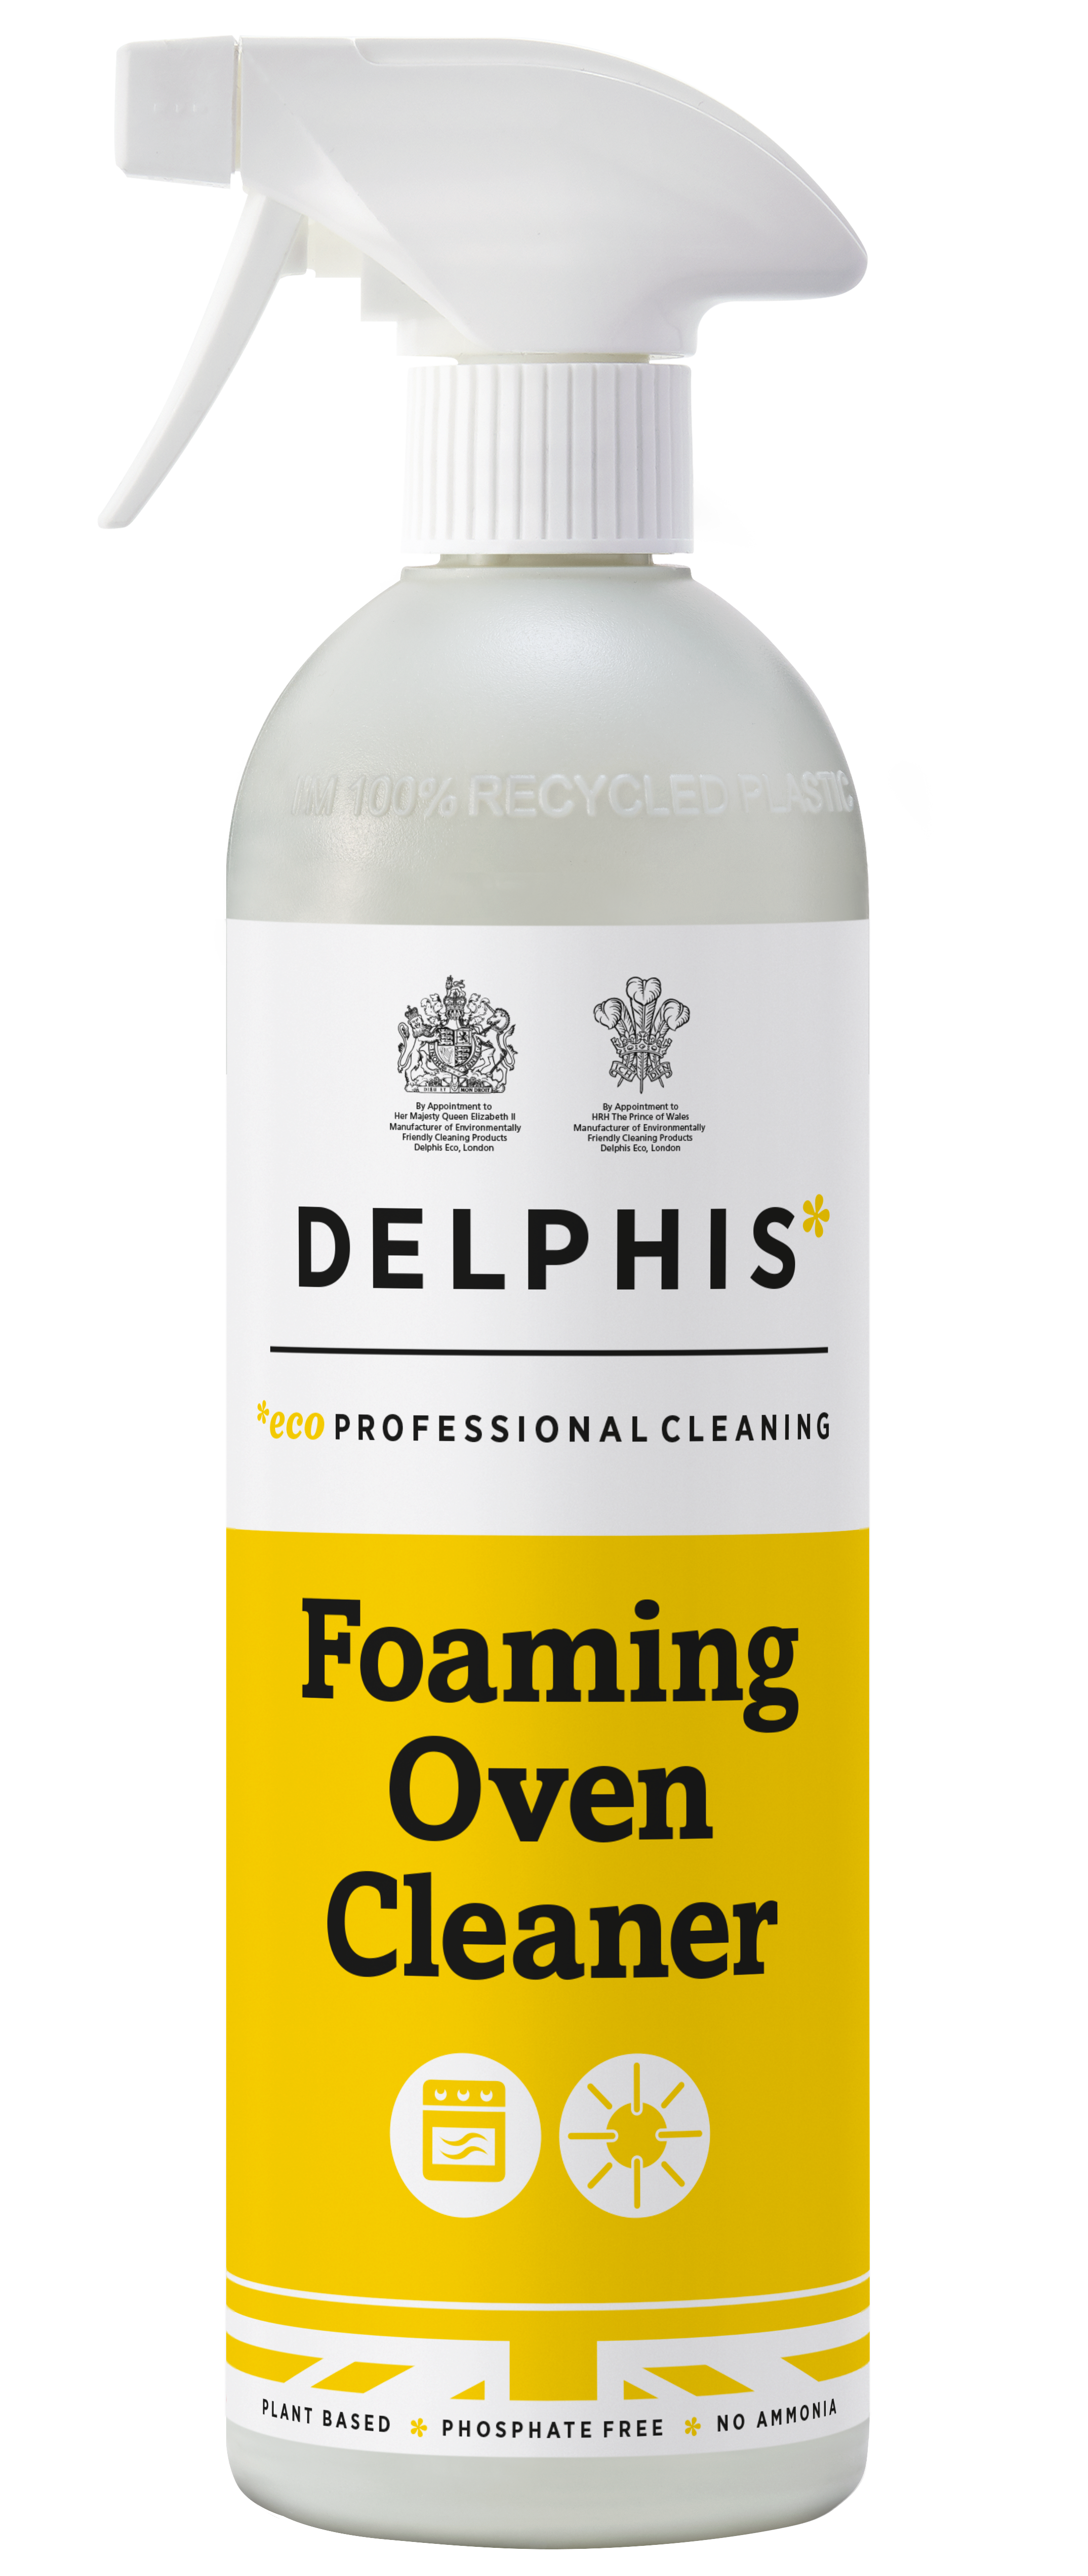 Delphis Foaming Oven Cleaner